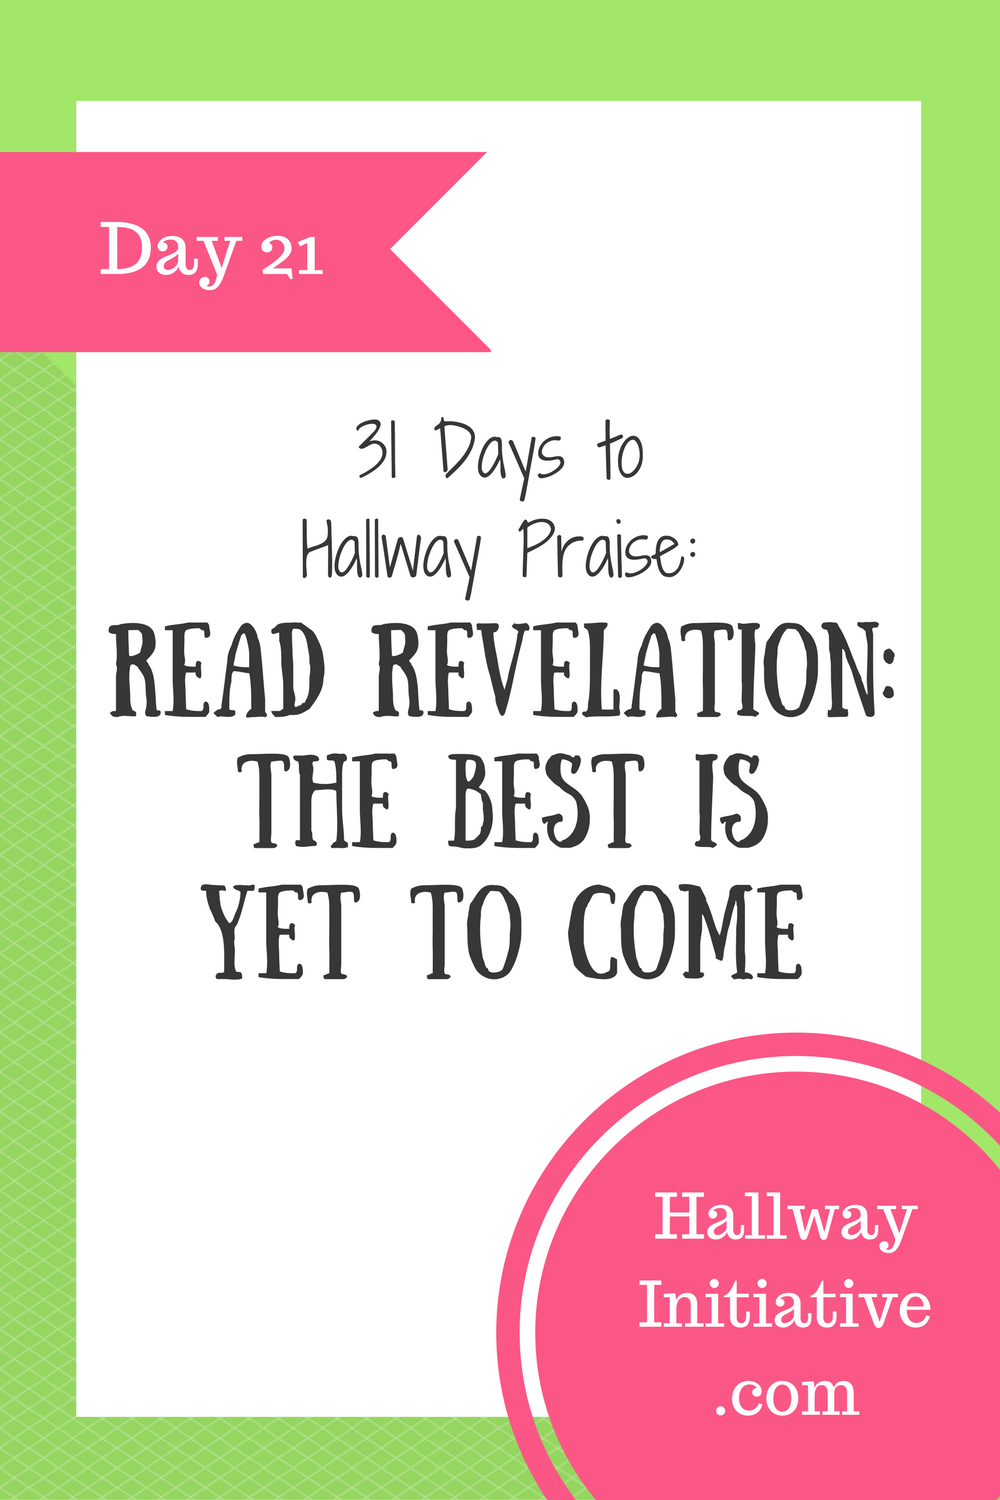 Day 21: read Revelation